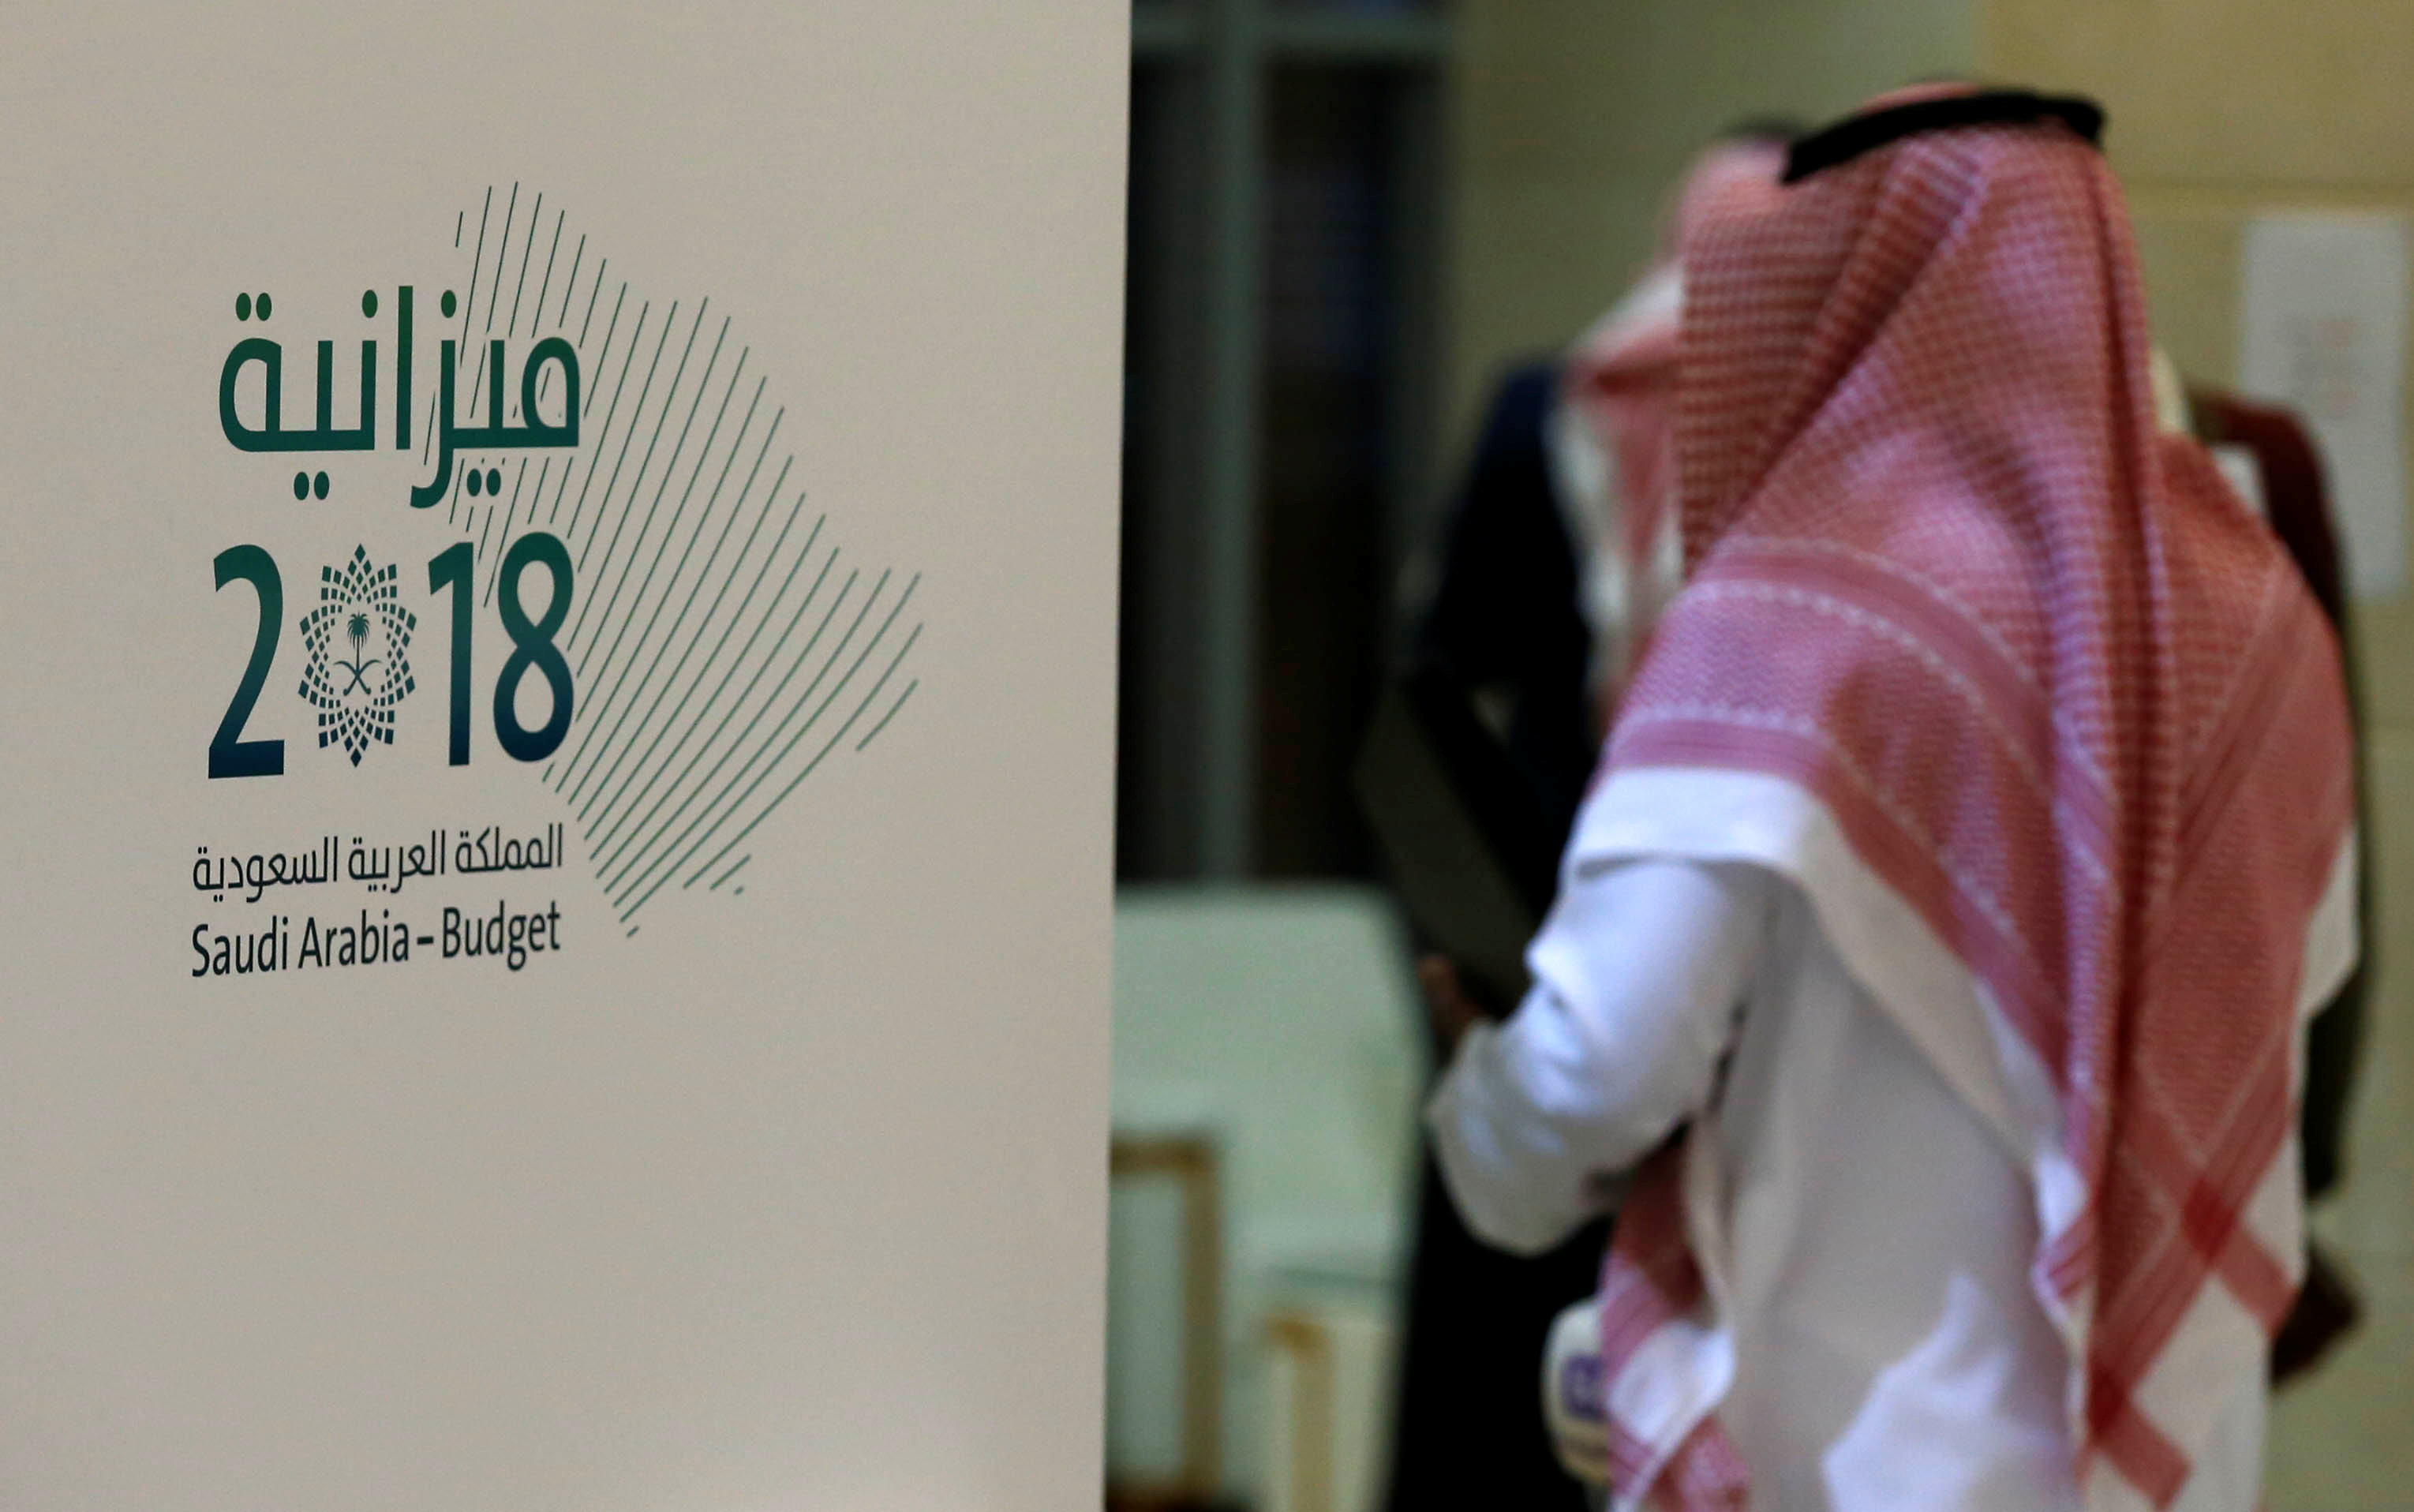 Saudi Arabia to slash oil dependence to less than half of budget